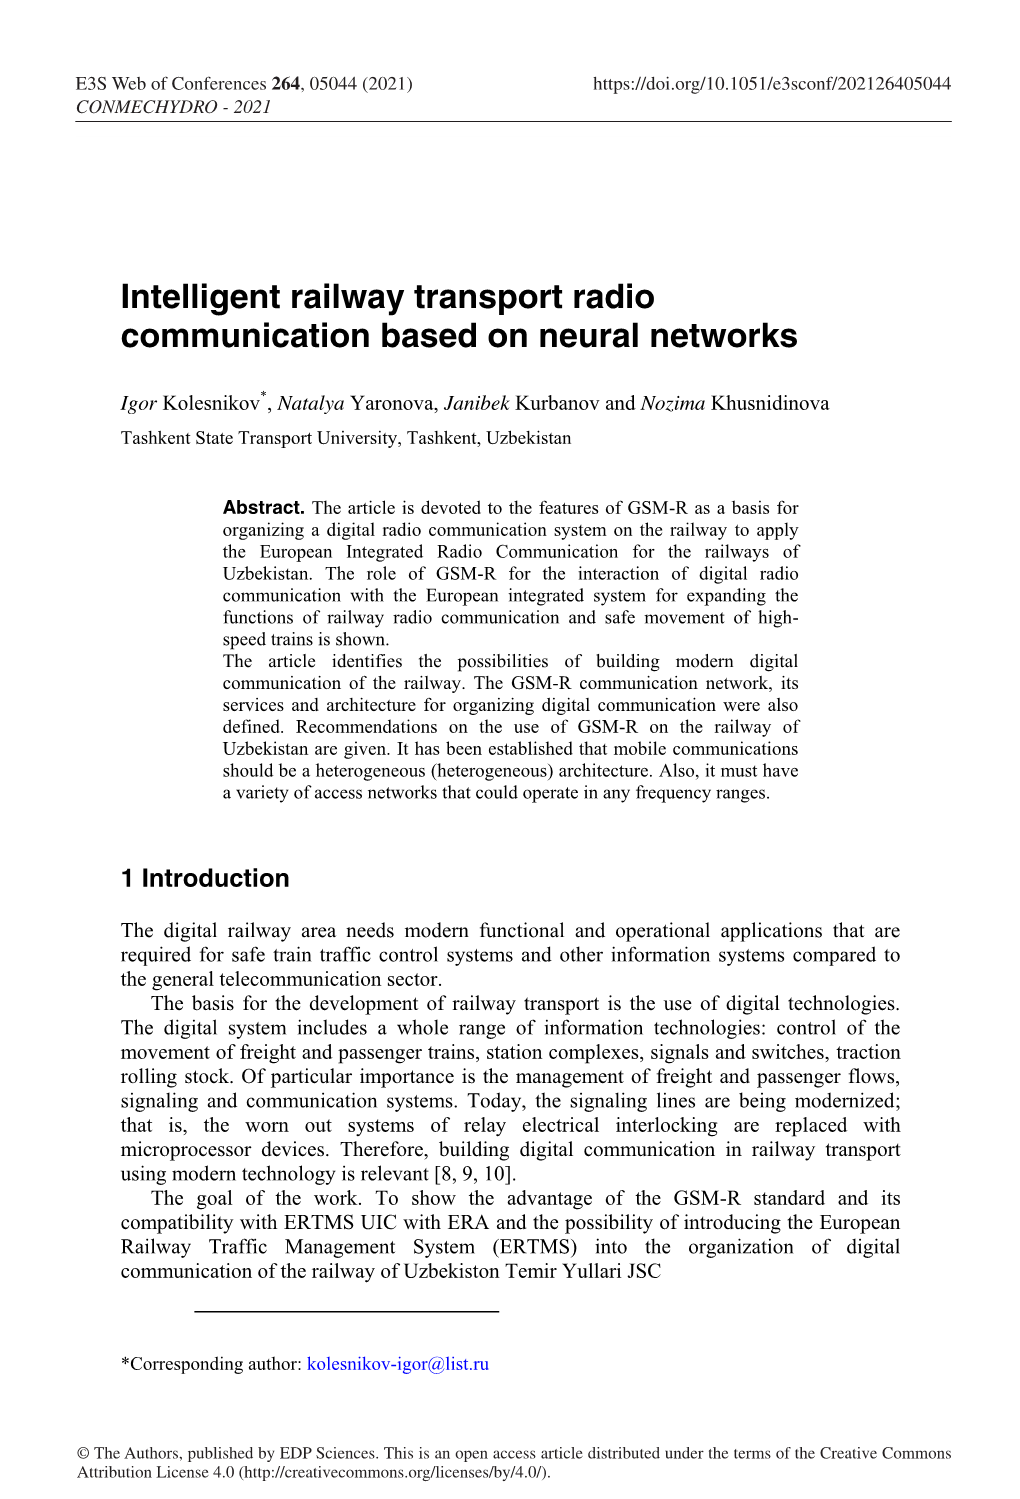 Intelligent Railway Transport Radio Communication Based on Neural Networks